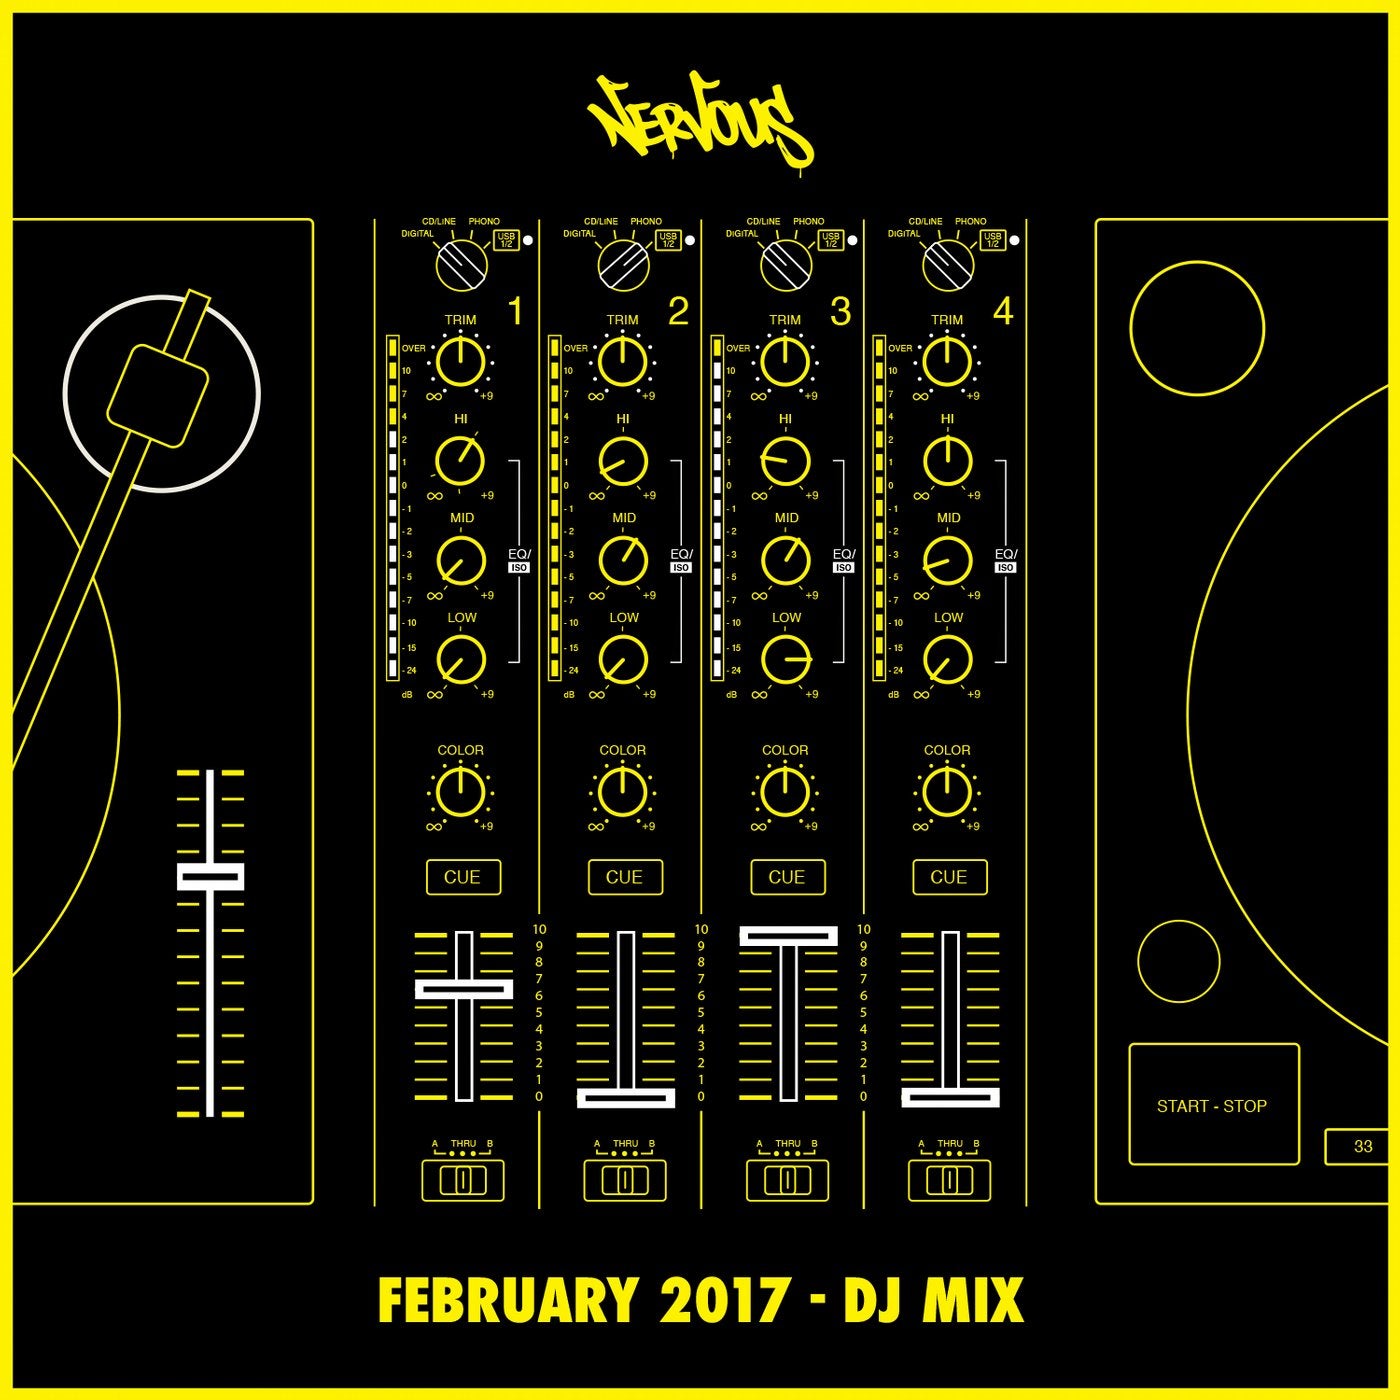 Nervous February 2017 - DJ Mix